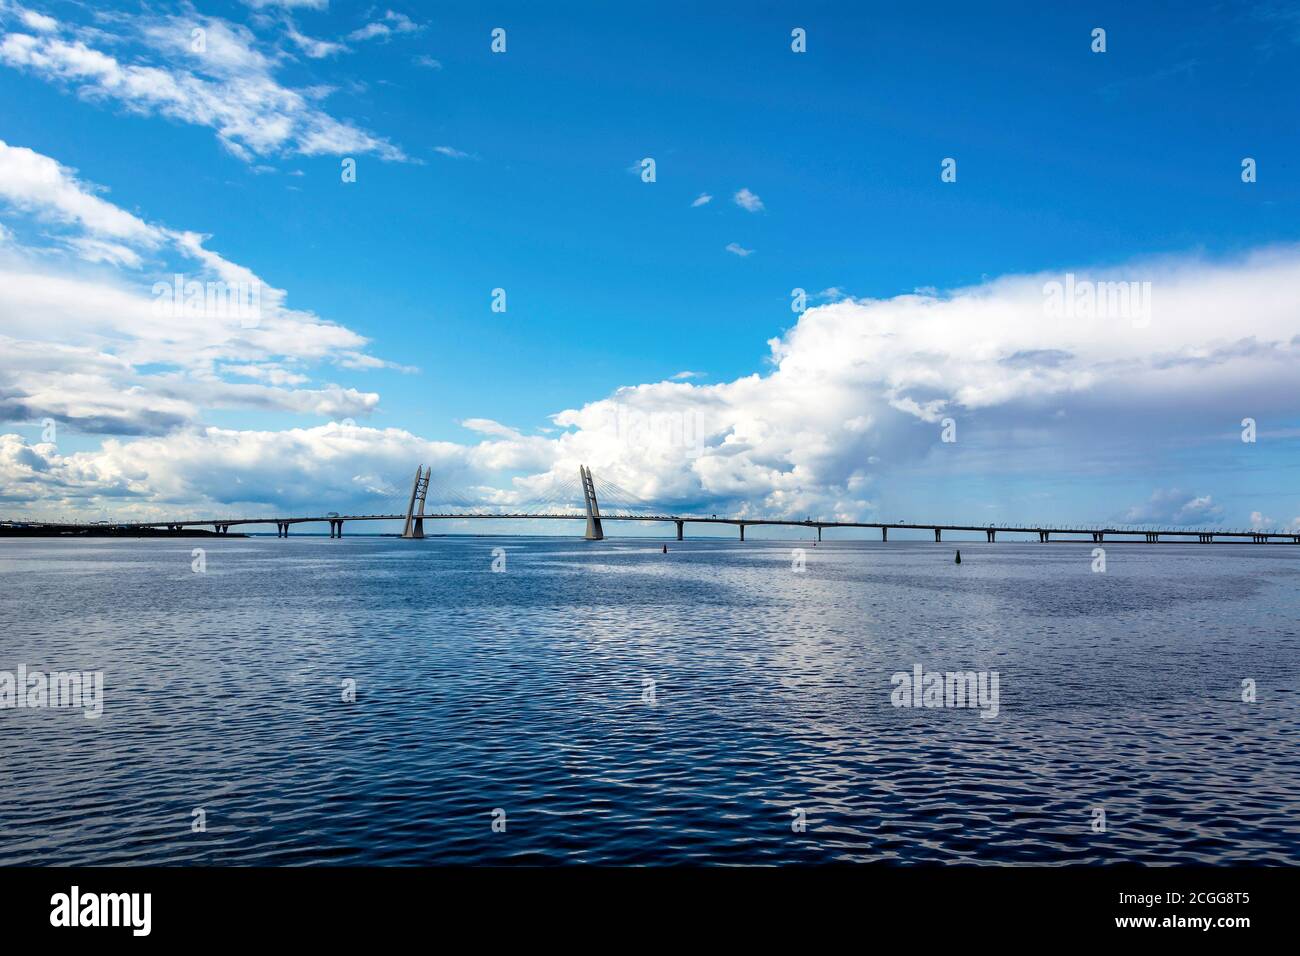 Saint Petersburg, Western high-speed diameter overpass in the Neva Bay, minimalistic landscape Stock Photo